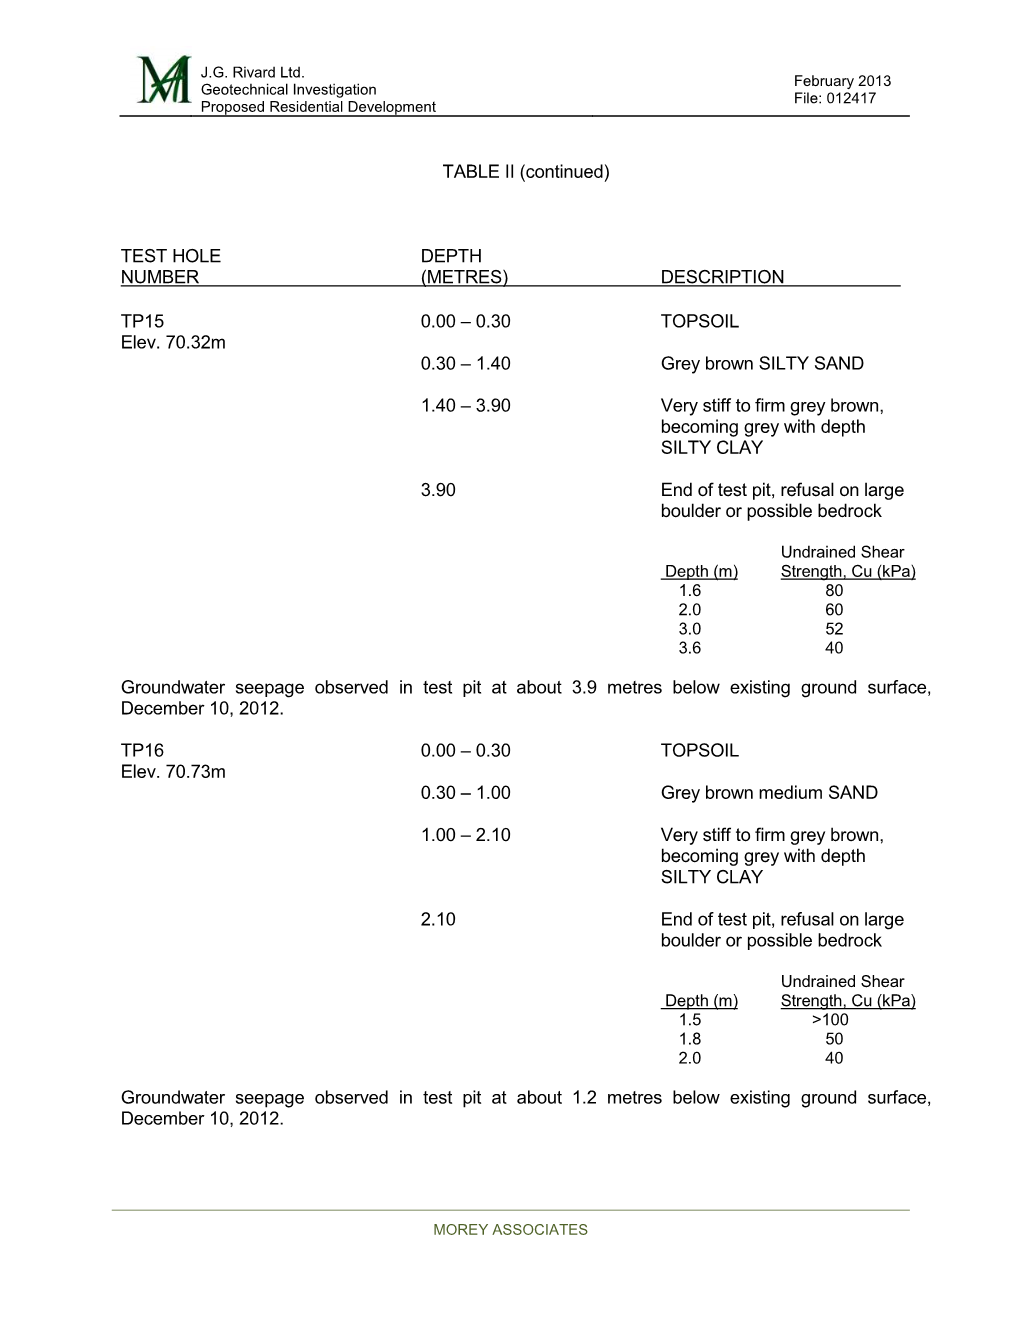 TABLE II (Continued) TEST HOLE DEPTH NUMBER (METRES) DESCRIPTION TP15 0.00 – 0.30 TOPSOIL Elev. 70.32M 0.30 – 1.40 Grey